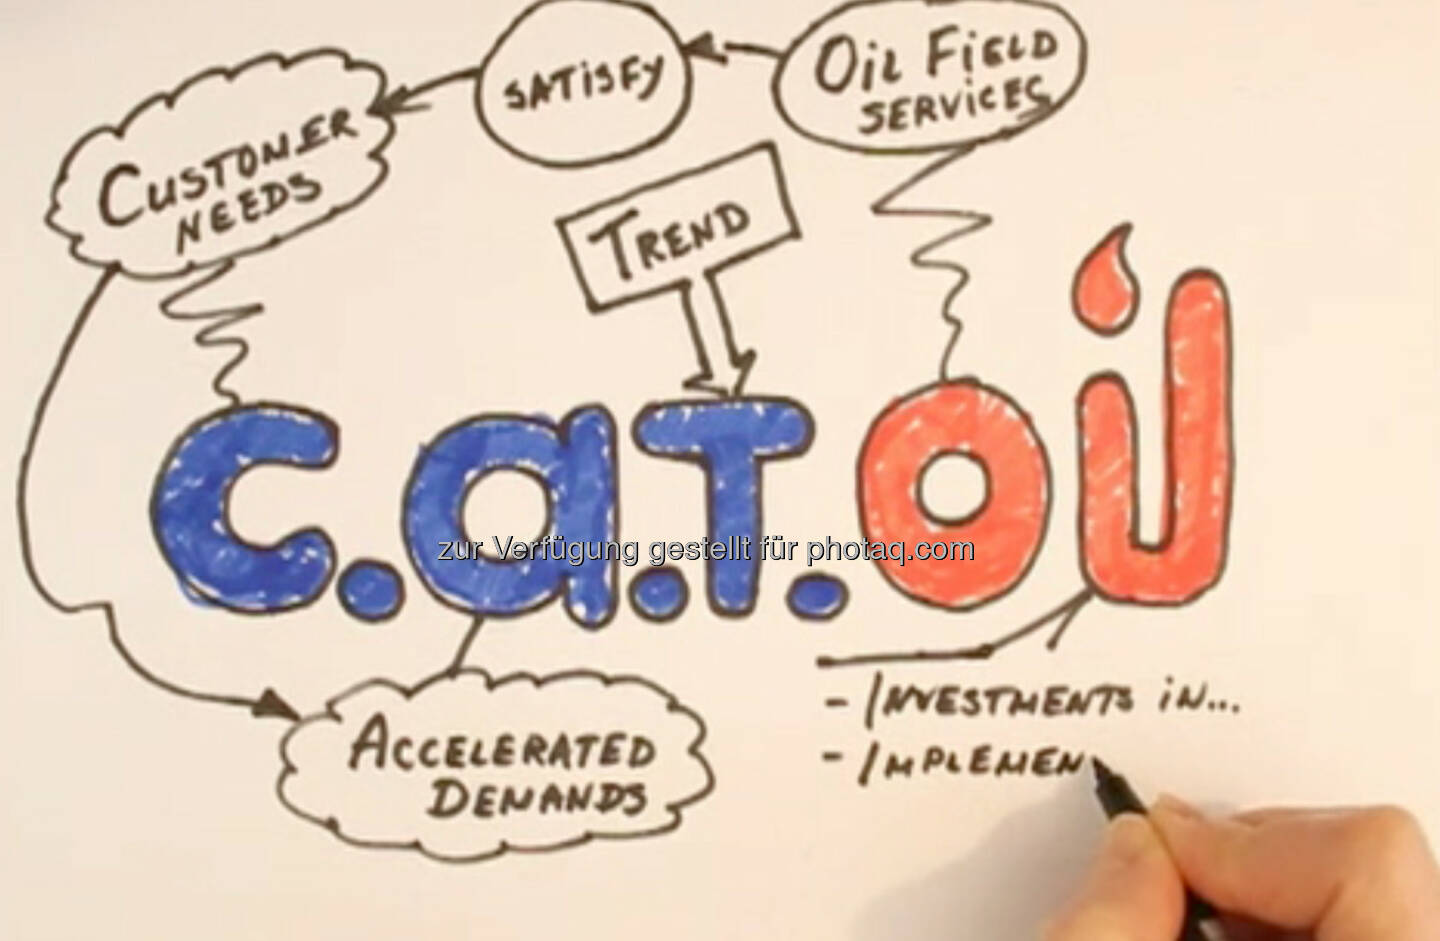 CAT oil aus http://www.catoilag.com/article.aspx?ArticleID=1327